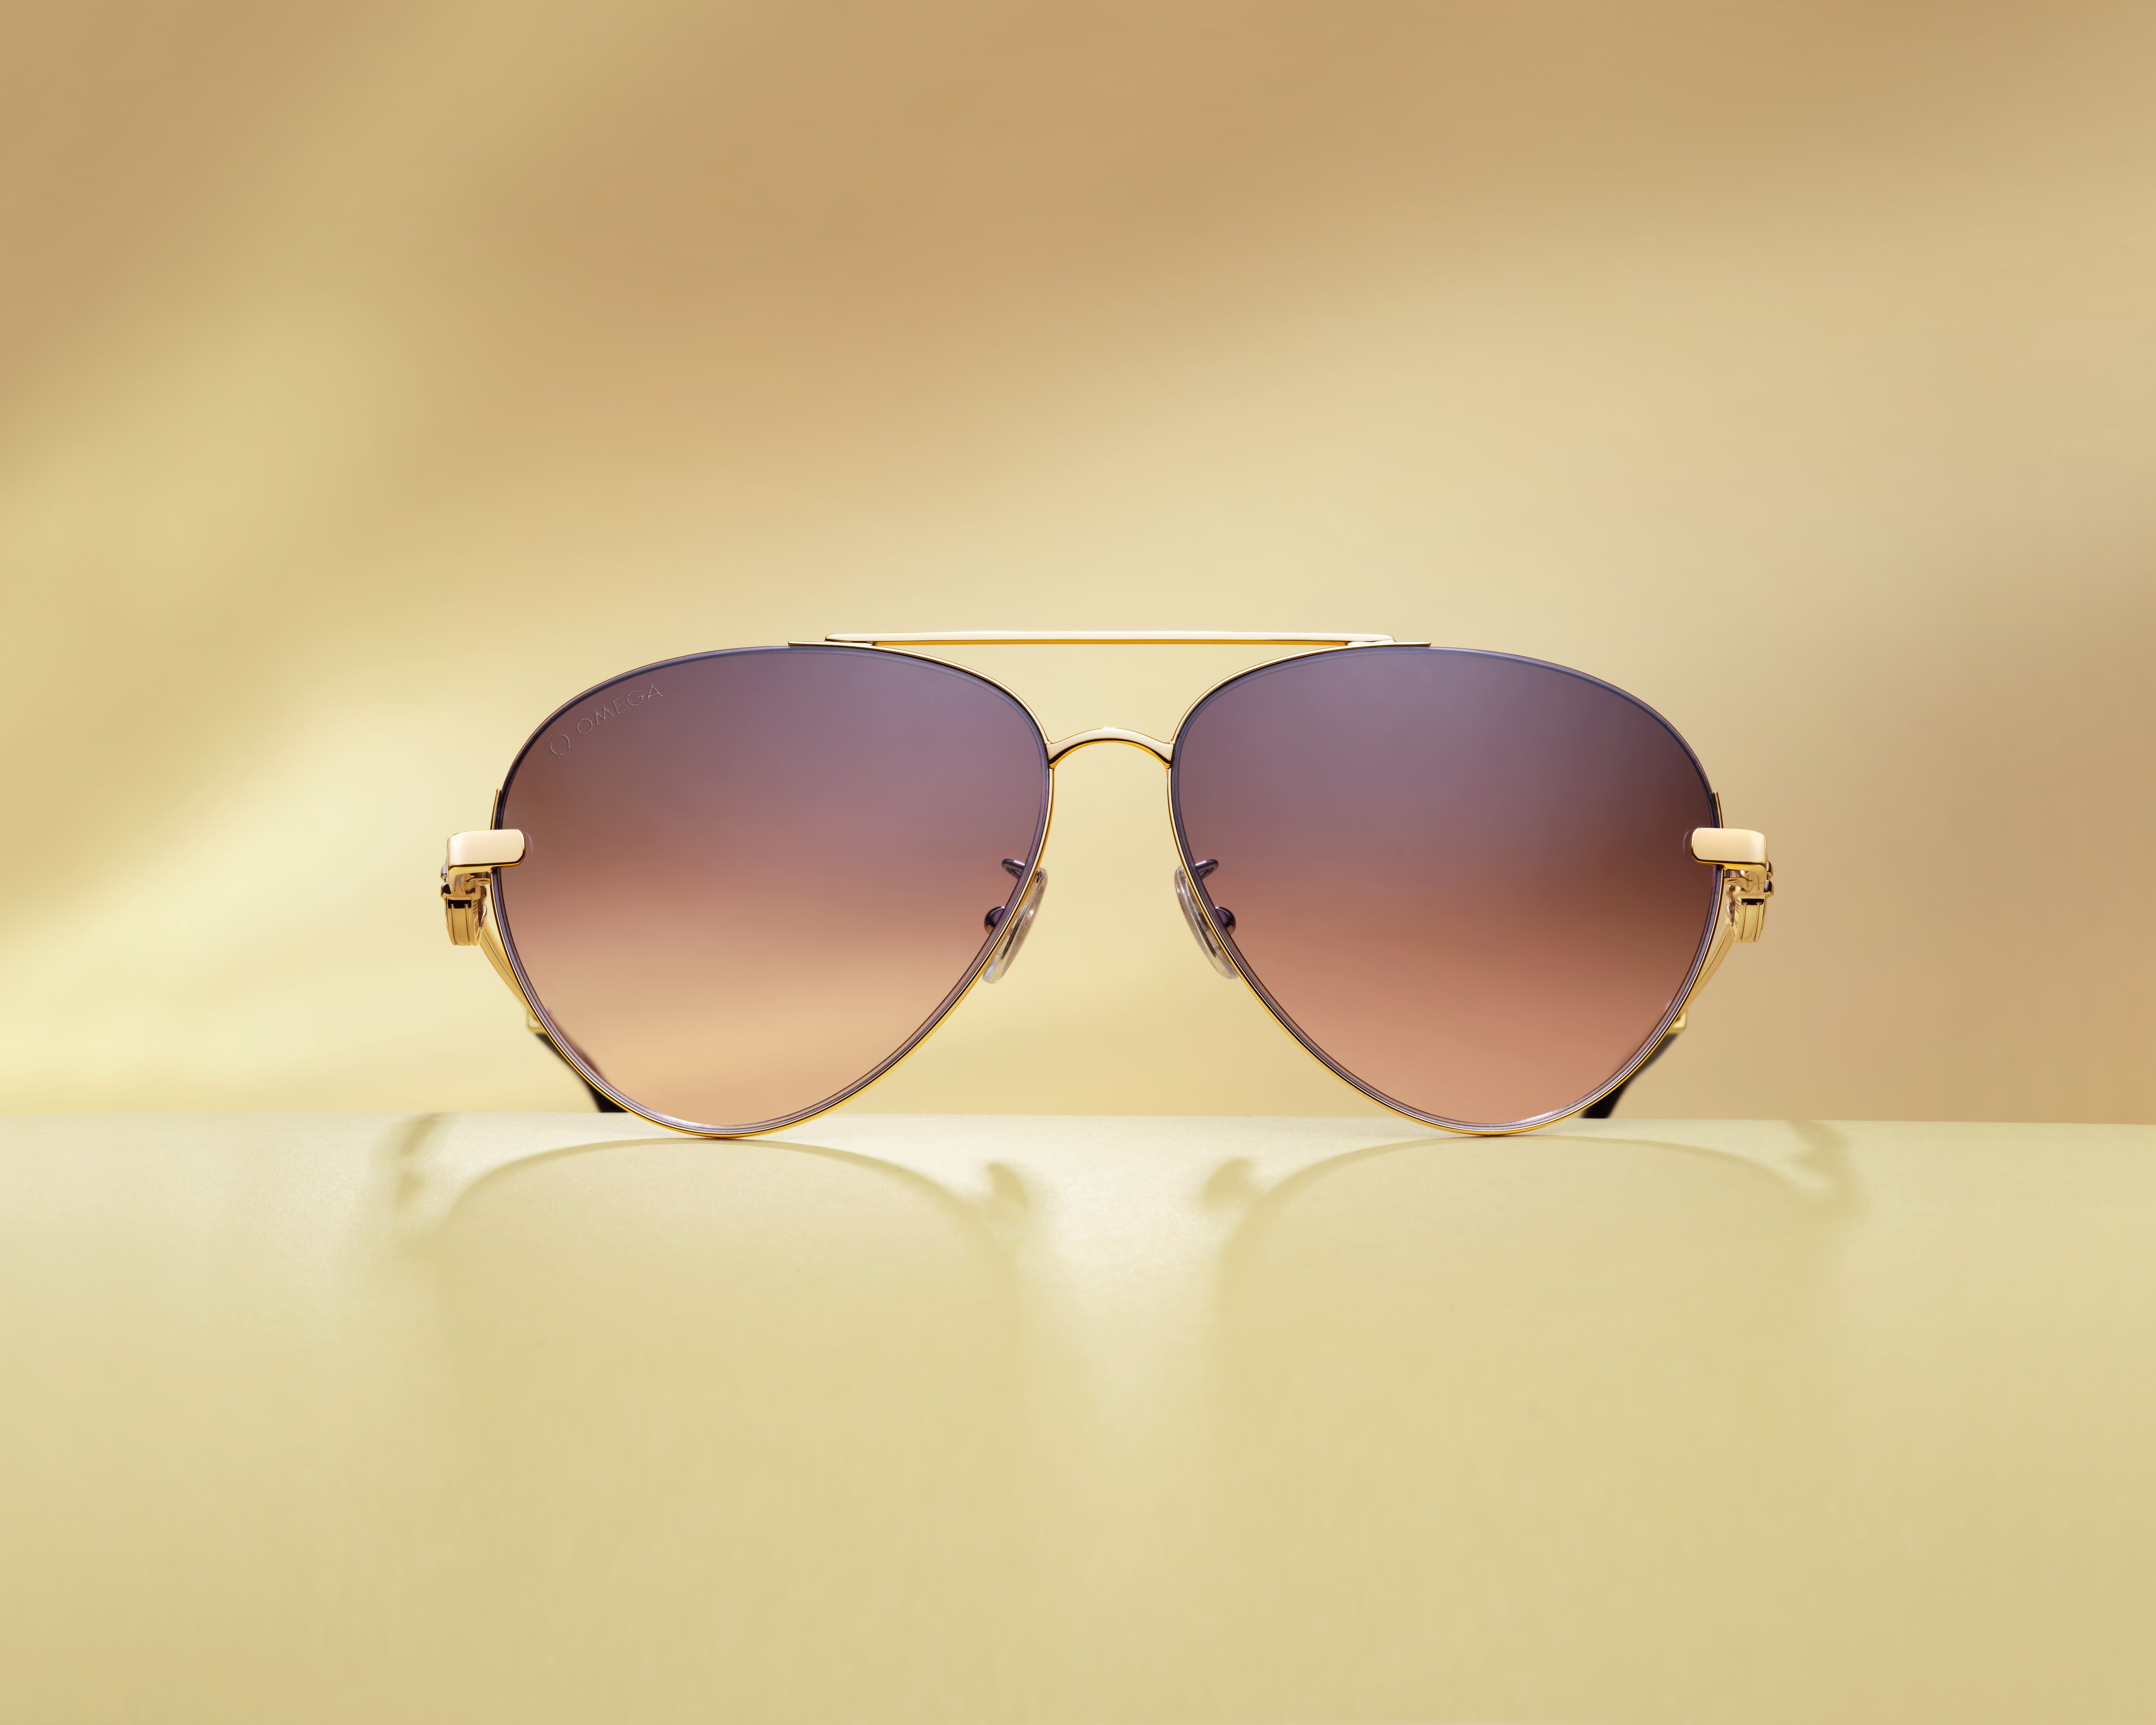 Omega sunglasses 2021 collection